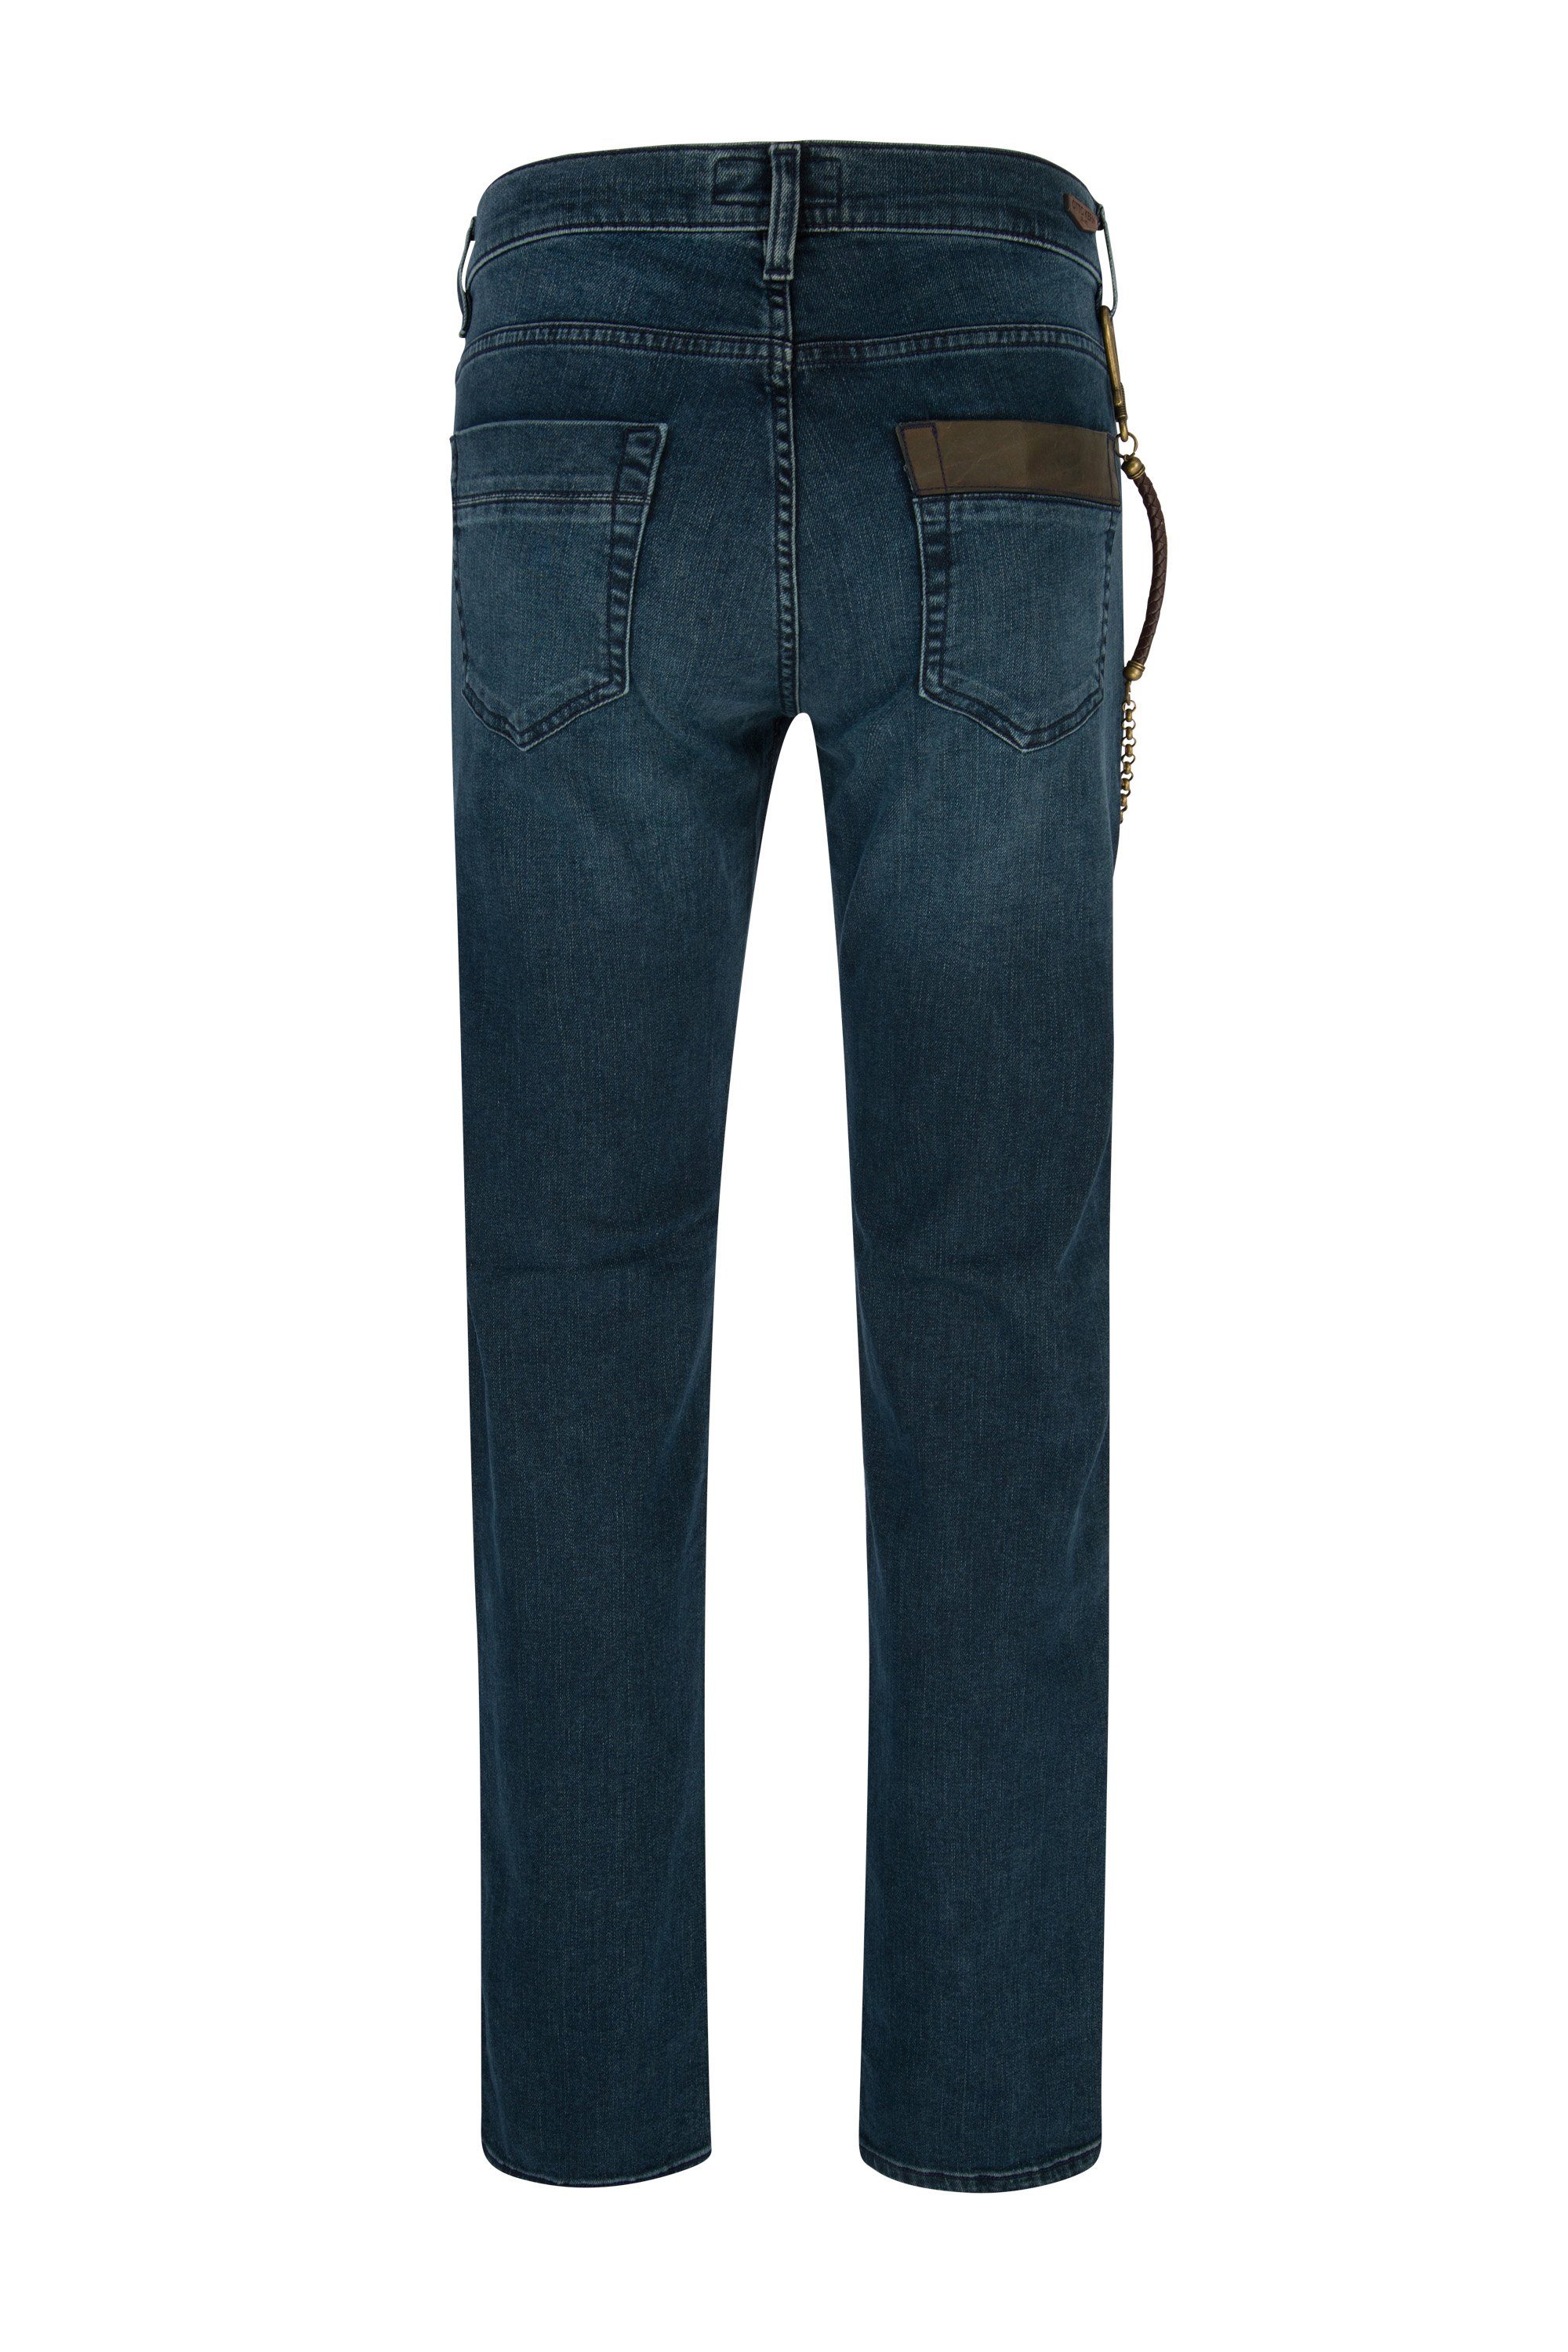 Kern 5-Pocket-Jeans OTTO KERN blue 67373 STAN 6208.6834 used buffies